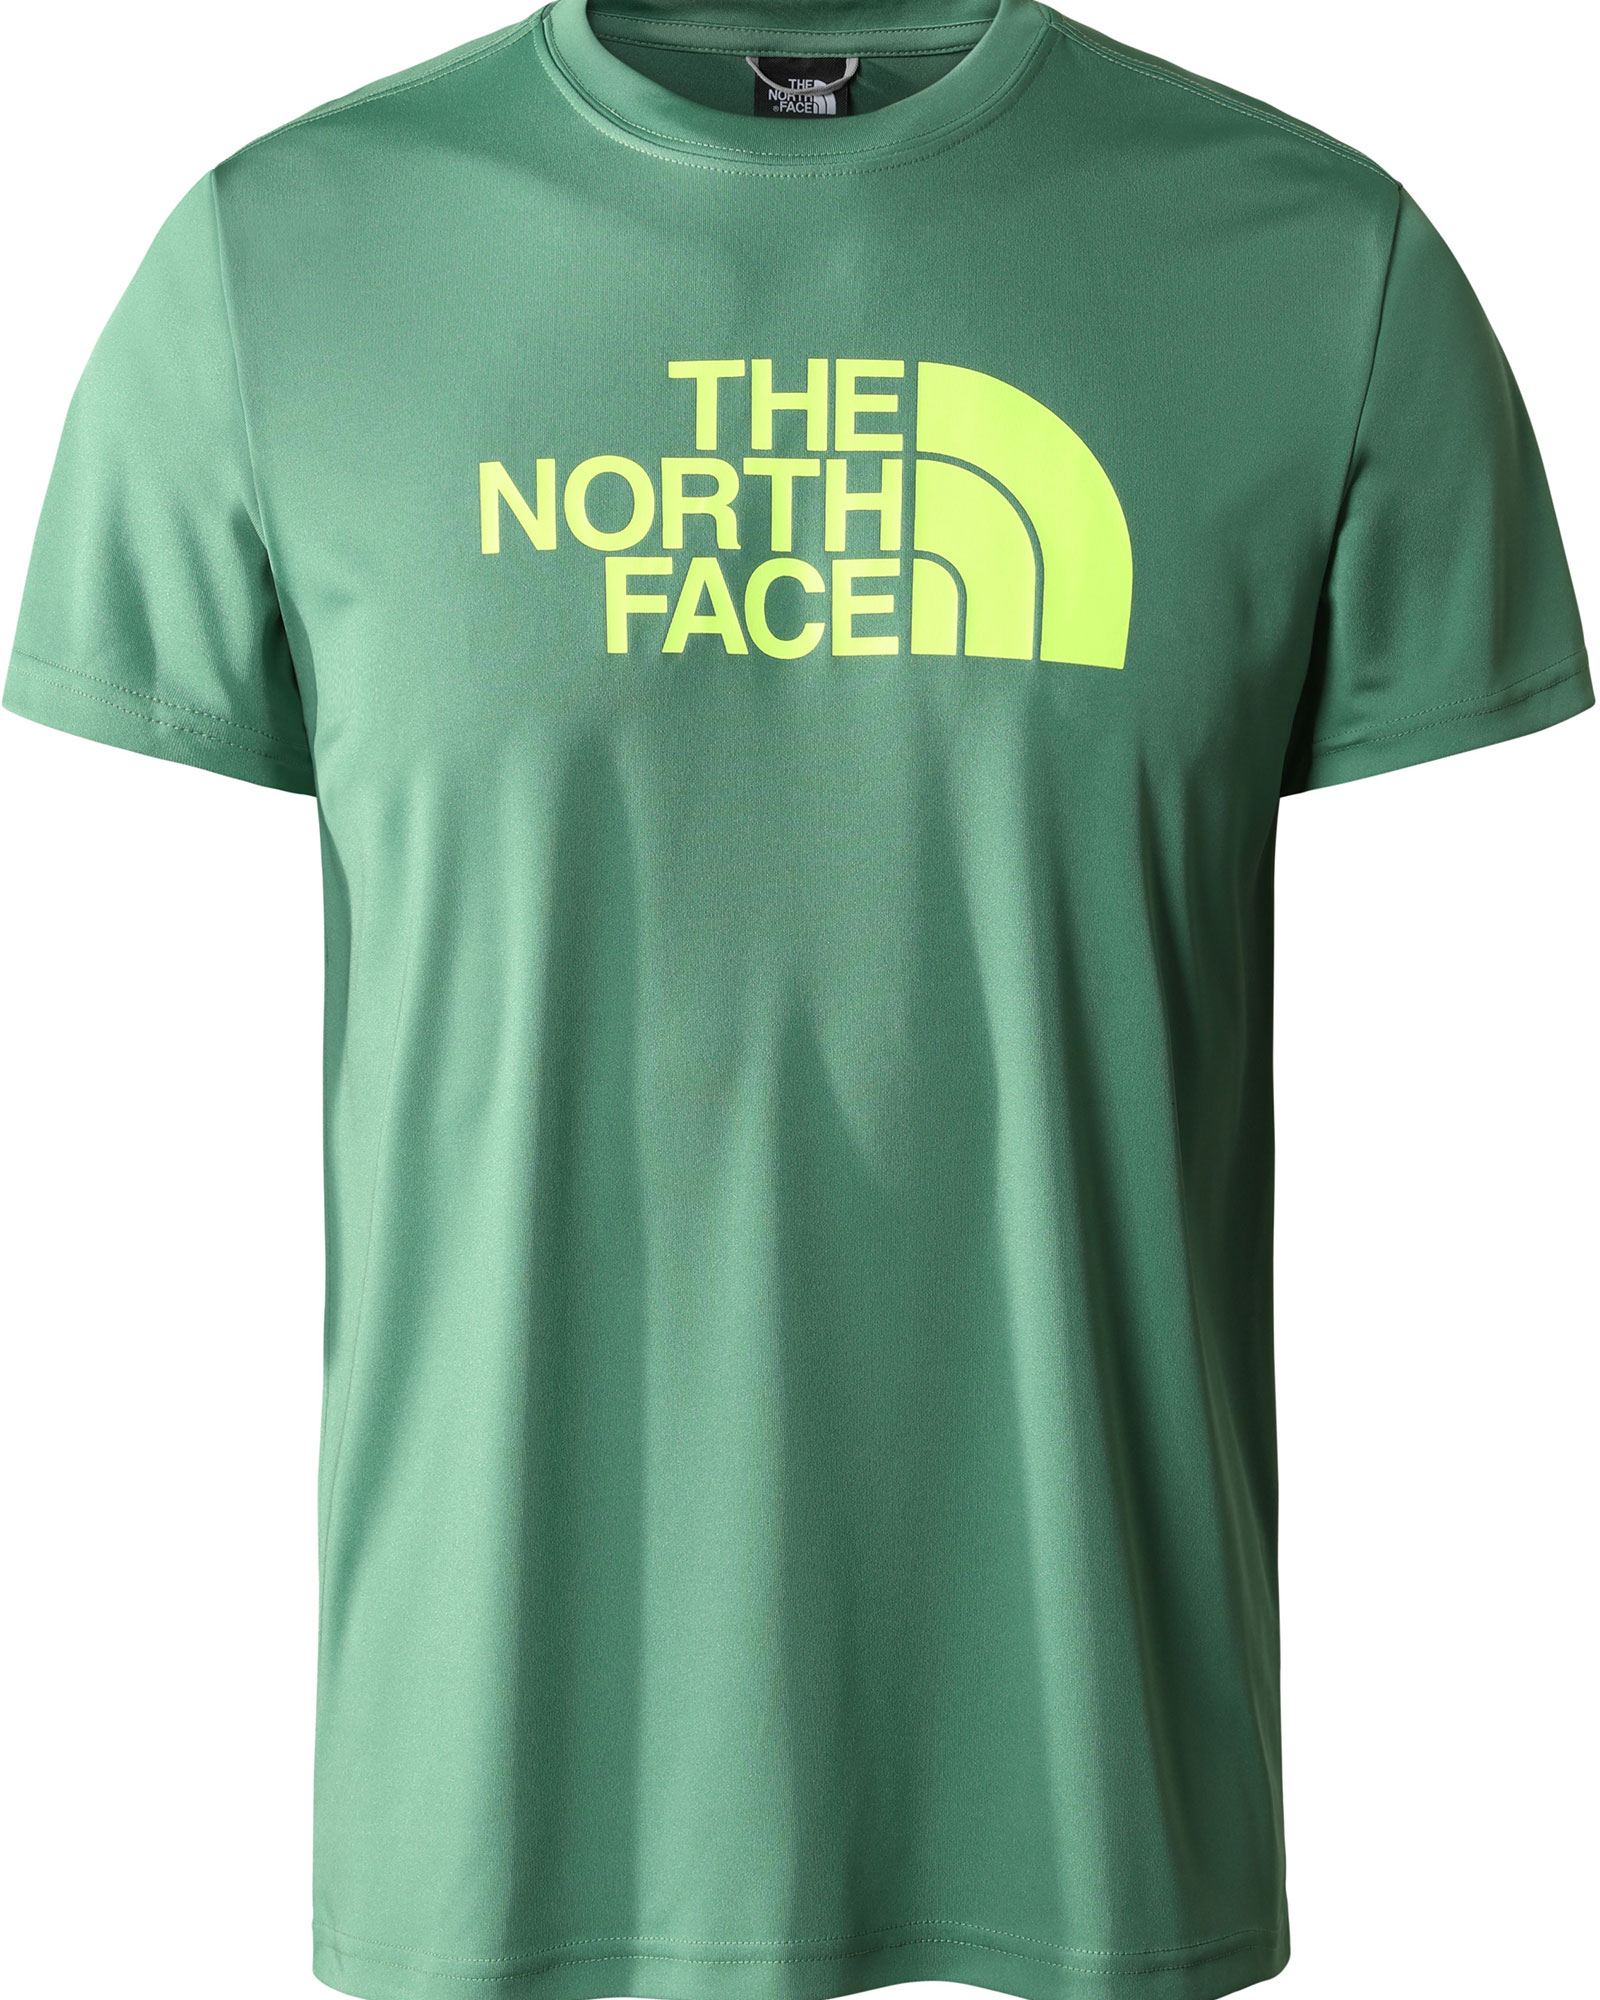 The North Face Reaxion Easy Men’s T Shirt - Deep Grass Green L